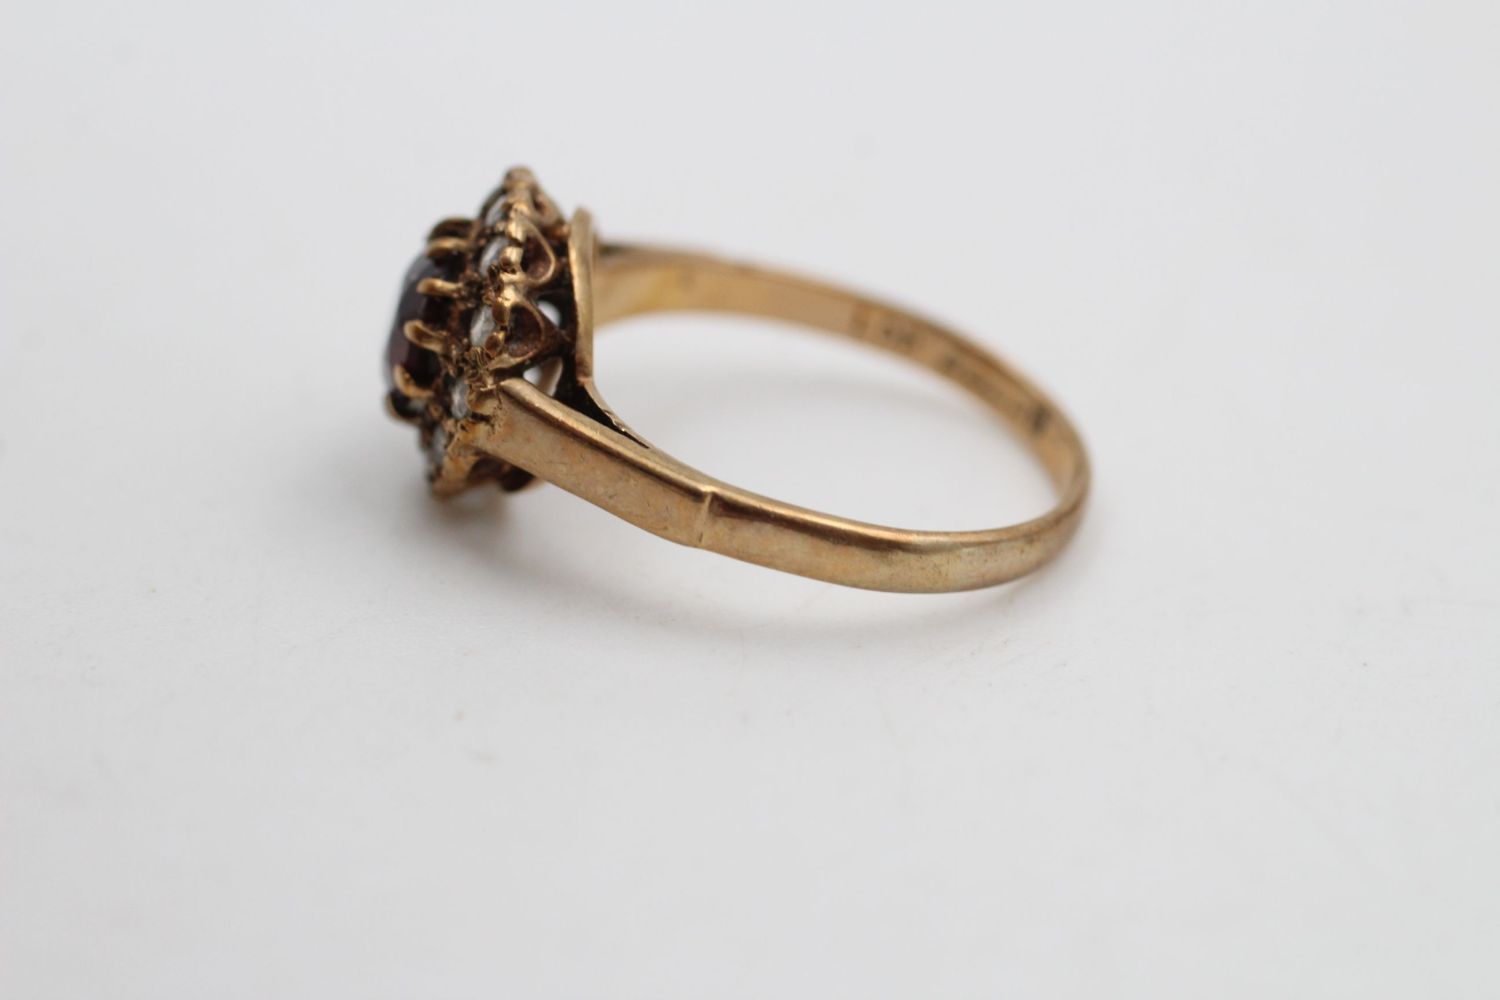 vintage 9ct gold garnet & gemstone halo ring 2.2 grams gross - Image 3 of 5